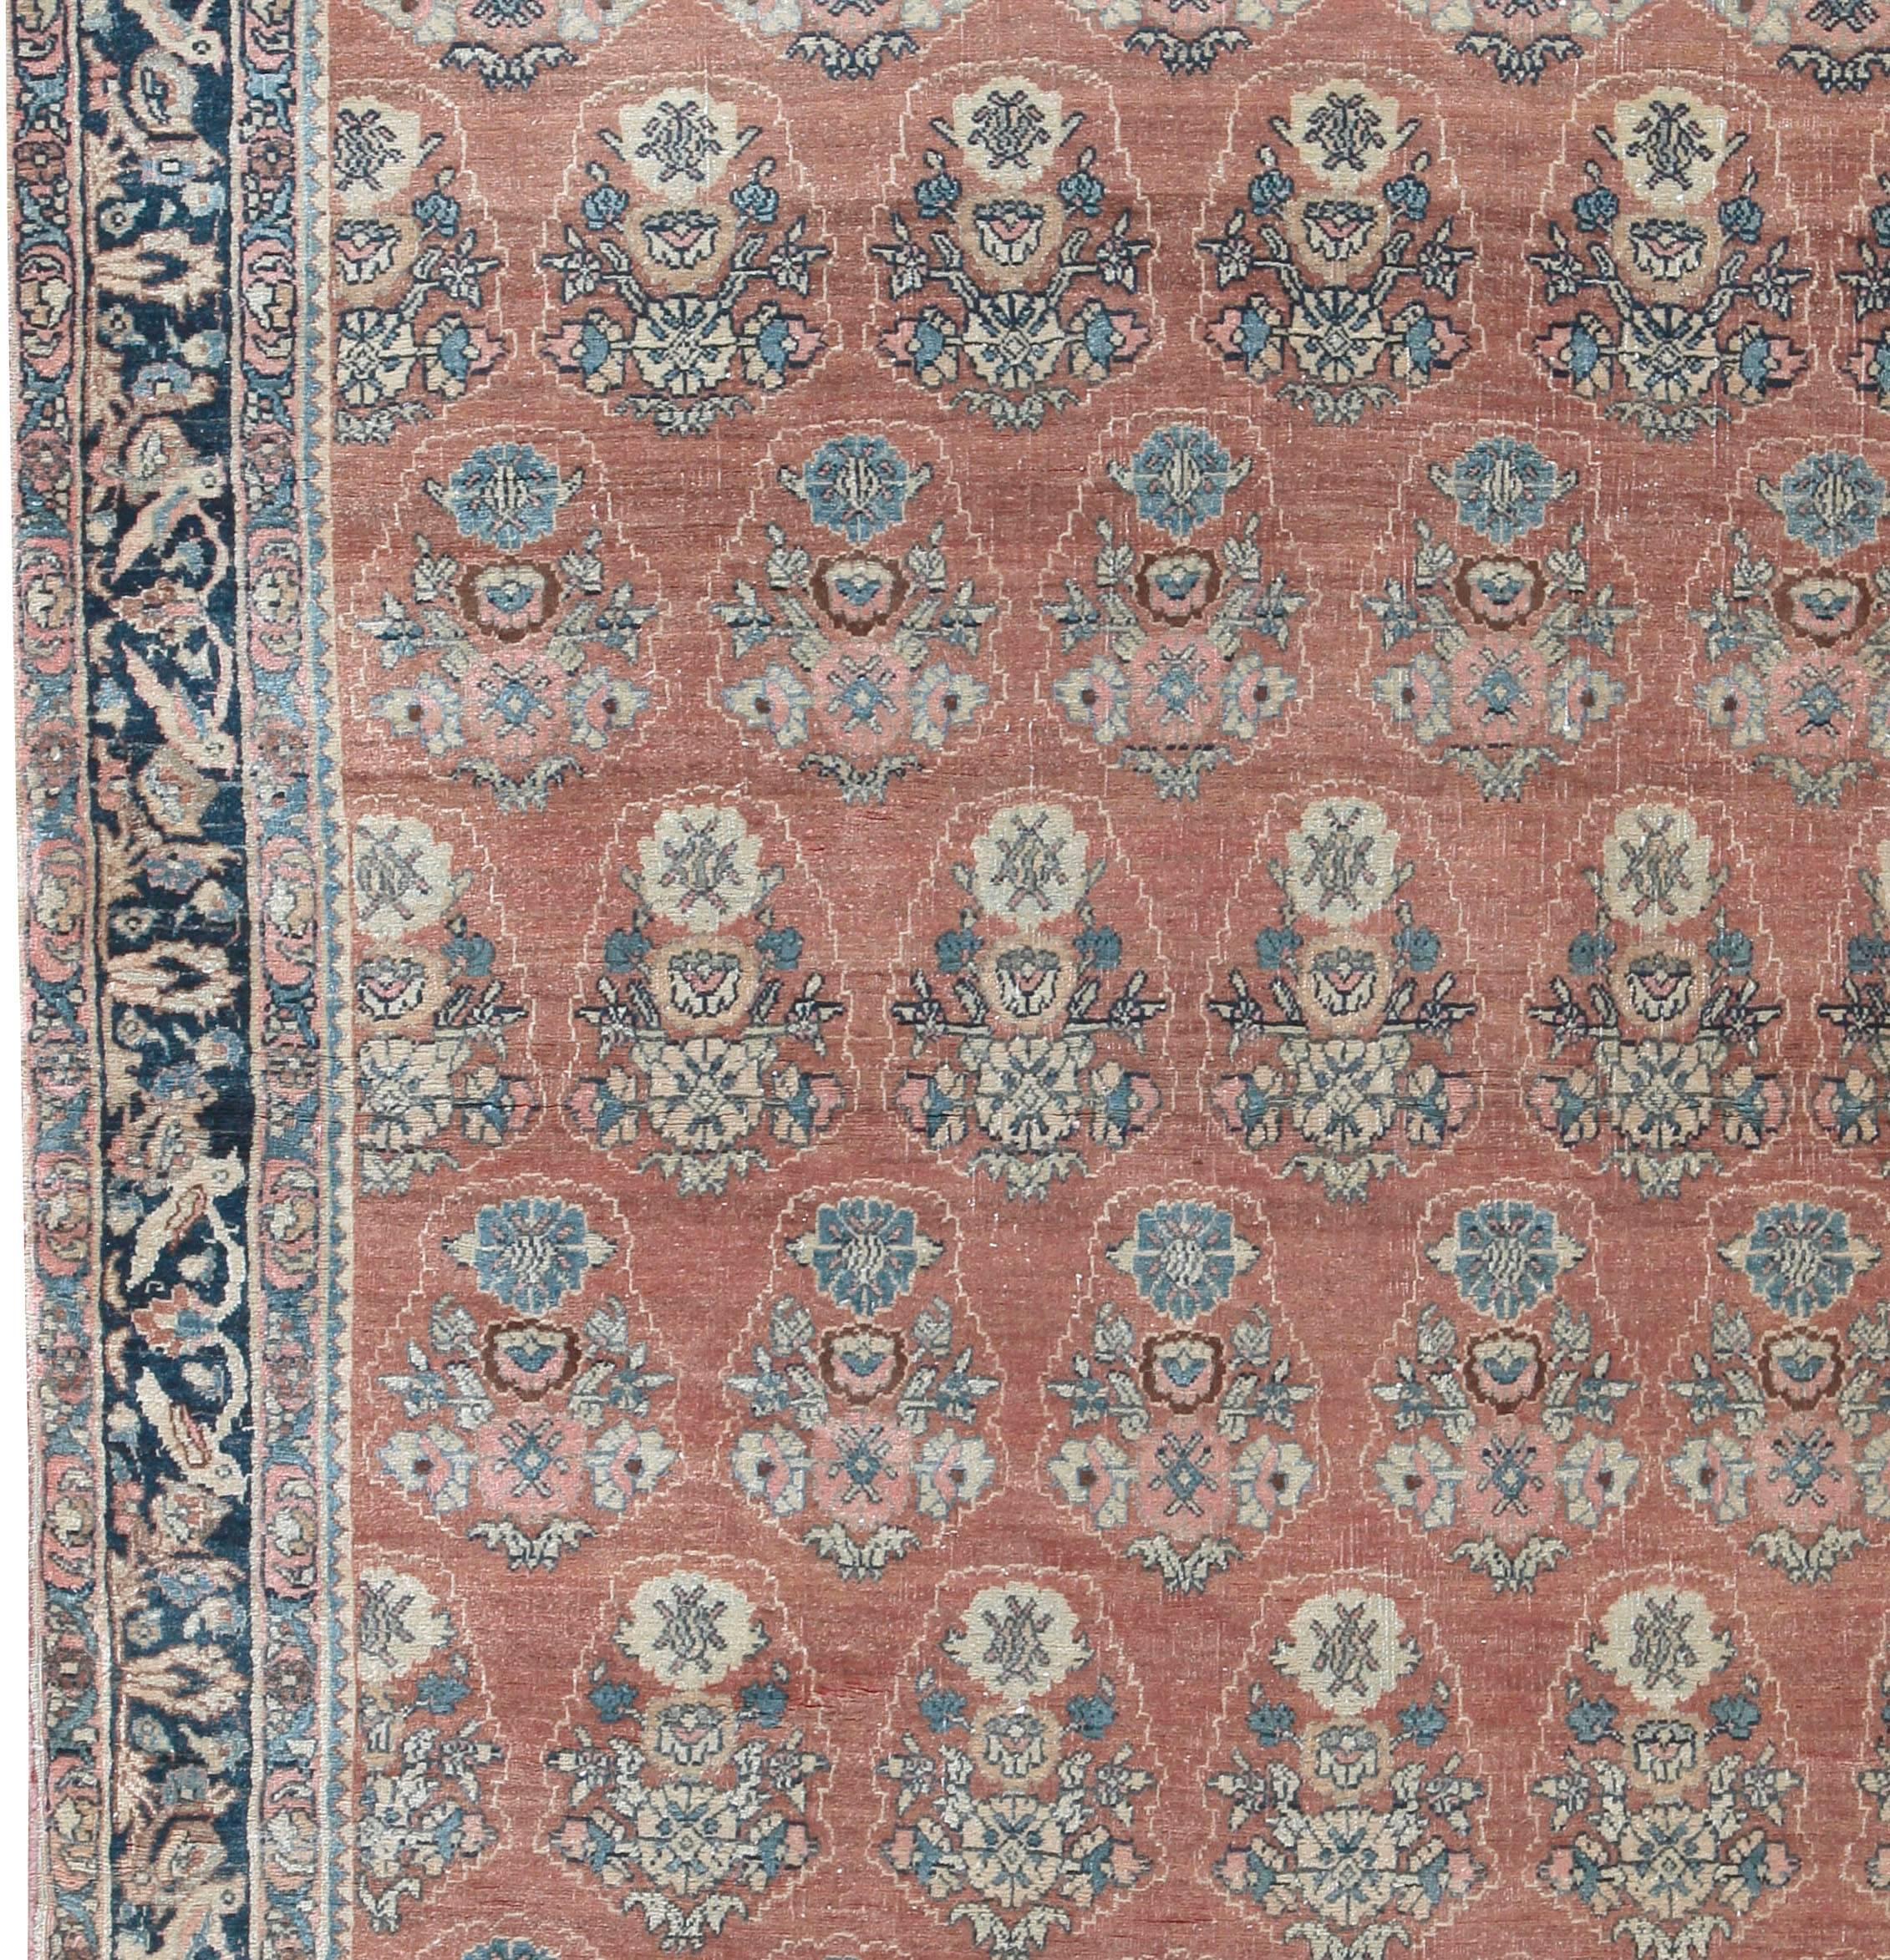 Antique Persian Bidjar rug carpet, circa 1900. This Bidjar rug, circa 1900 has a repeating floral pattern enclosed by a deep blue border. A real delight to the eye. Size: 3'7 x 5'3.